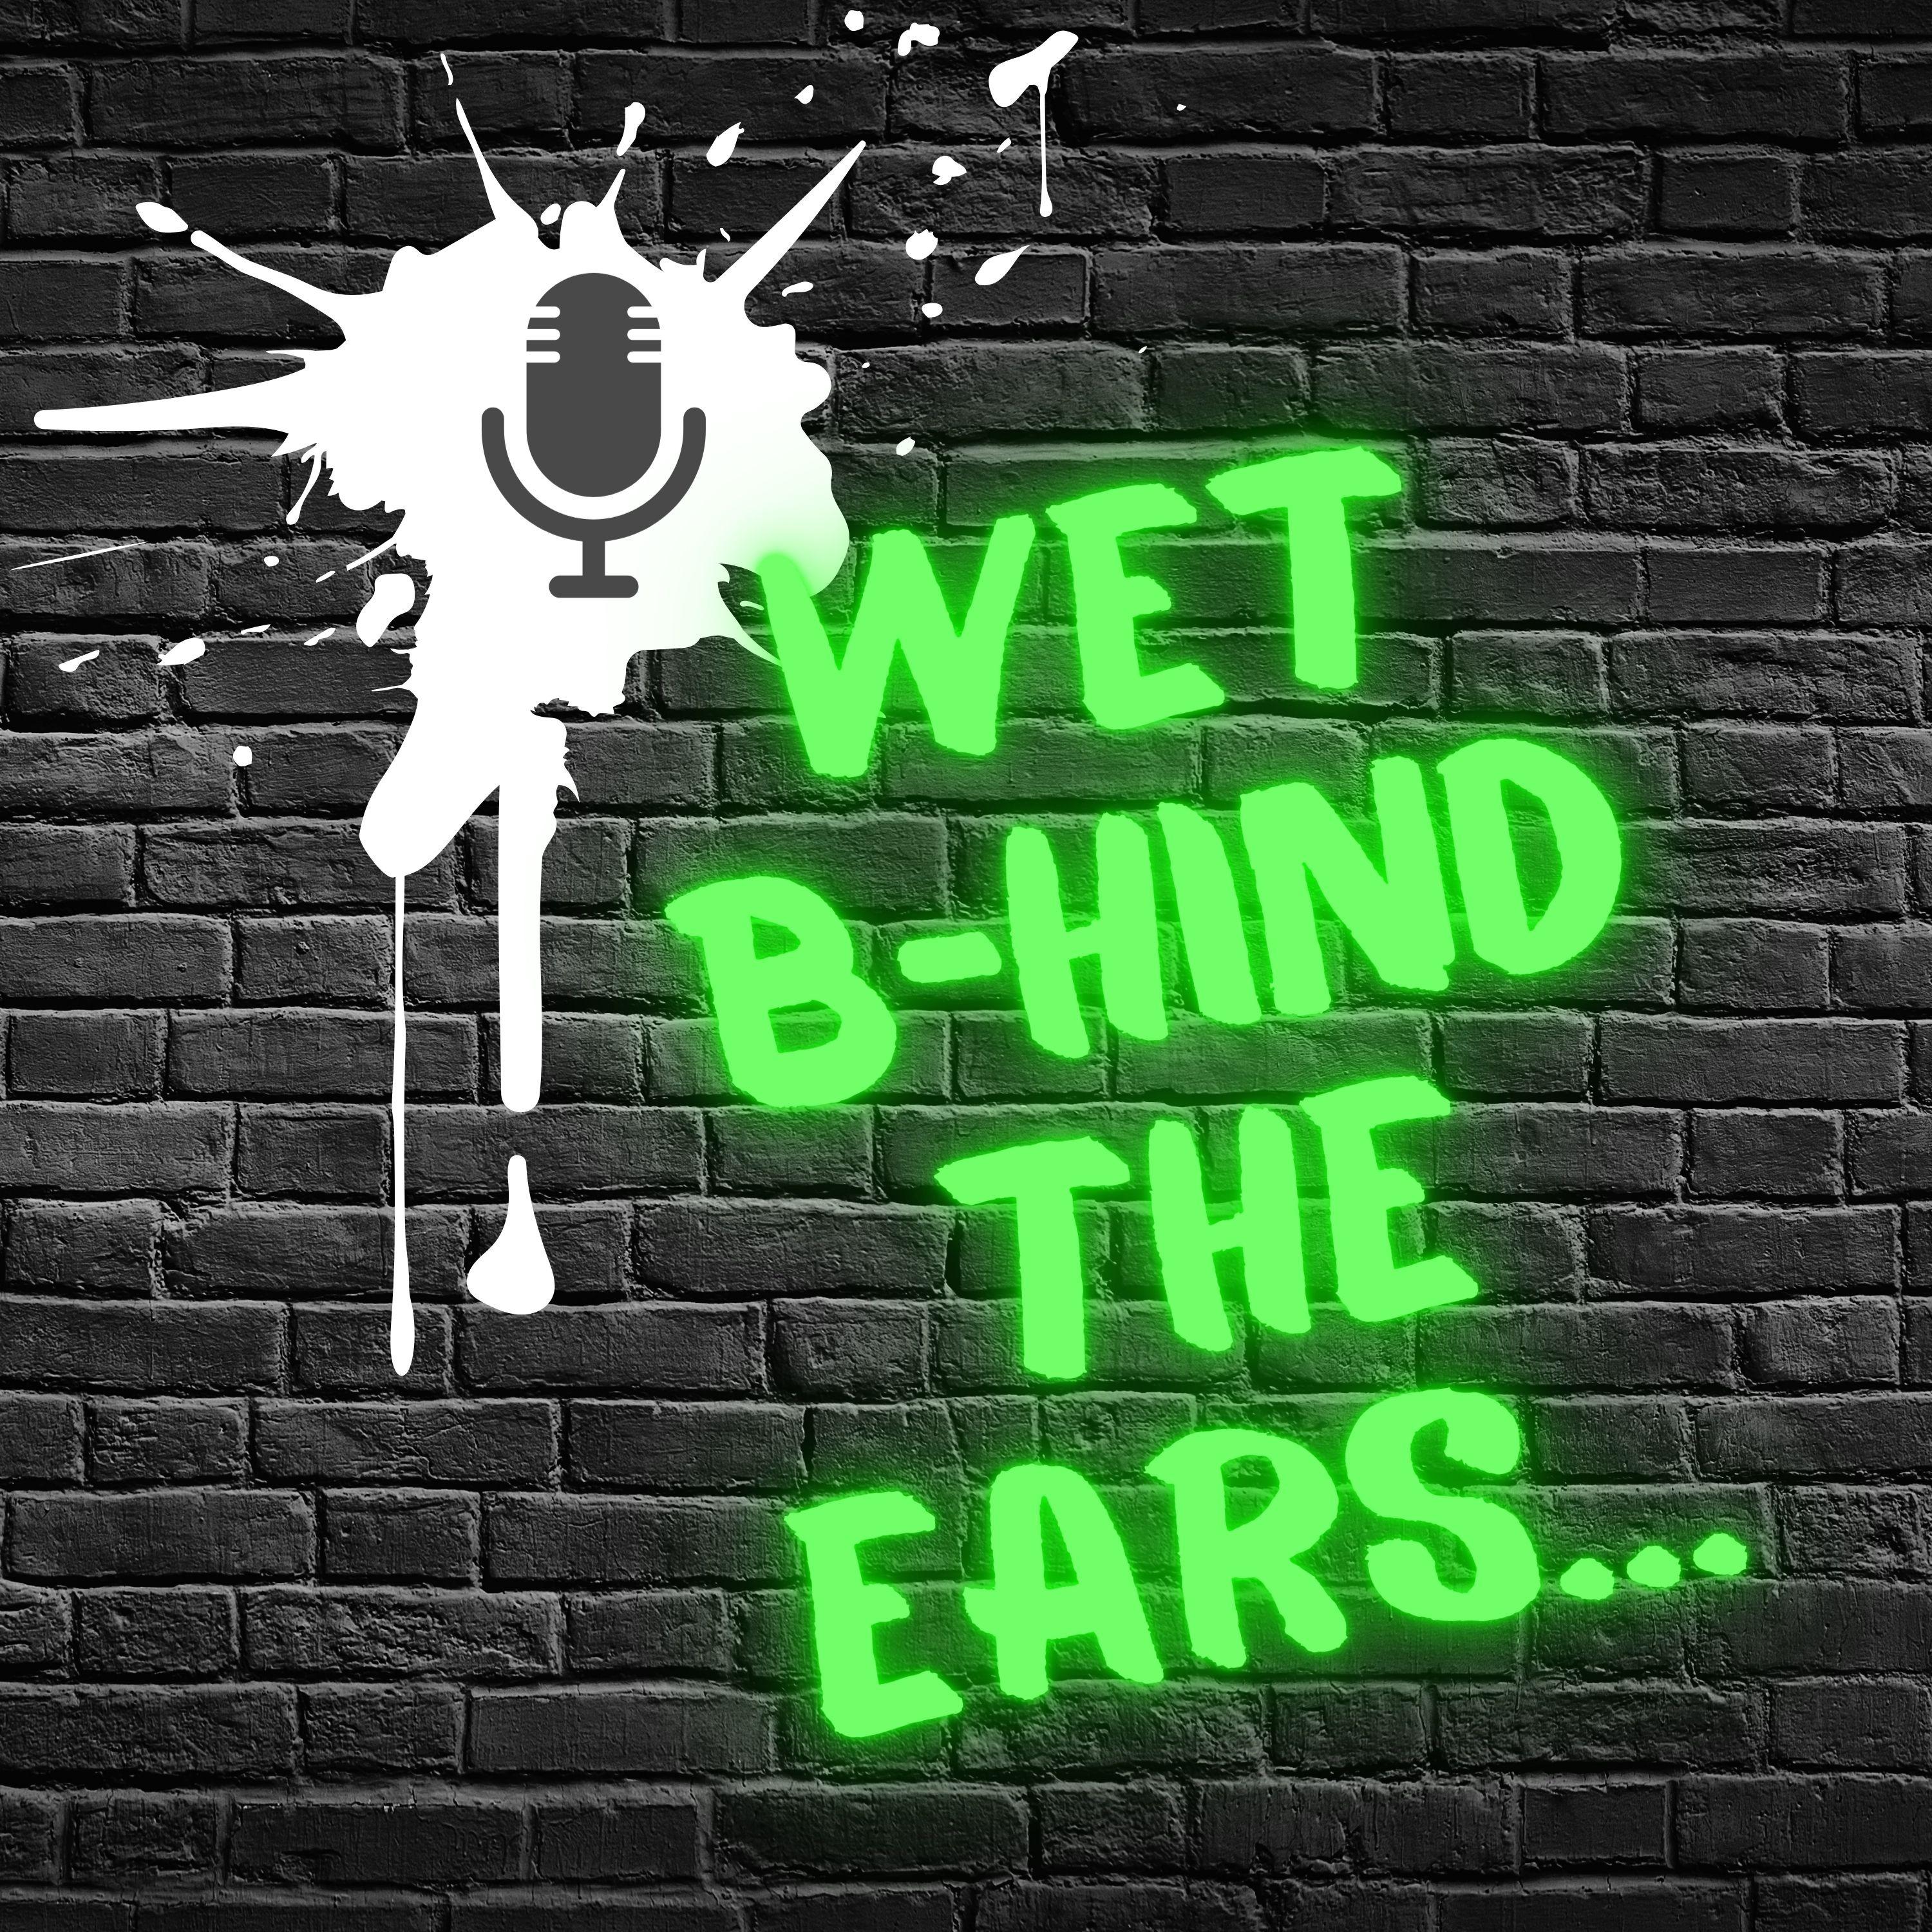 Wet B-Hind the Ears...